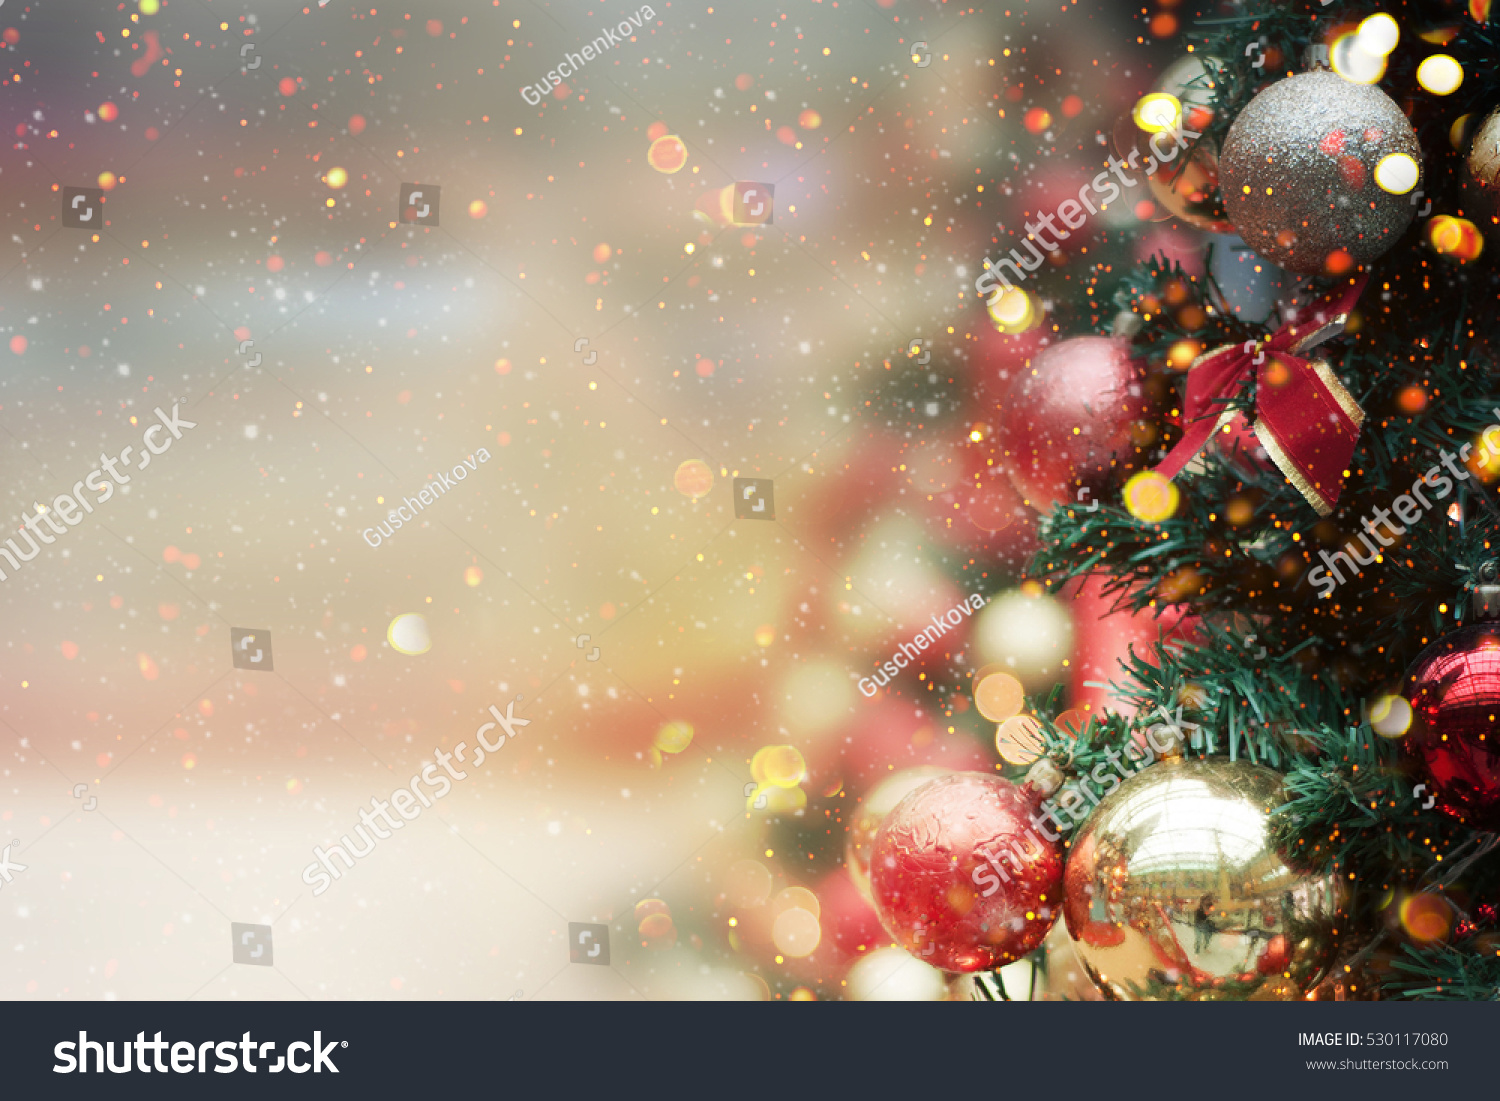 Christmas Background Stock Photo 530117080 : Shutterstock